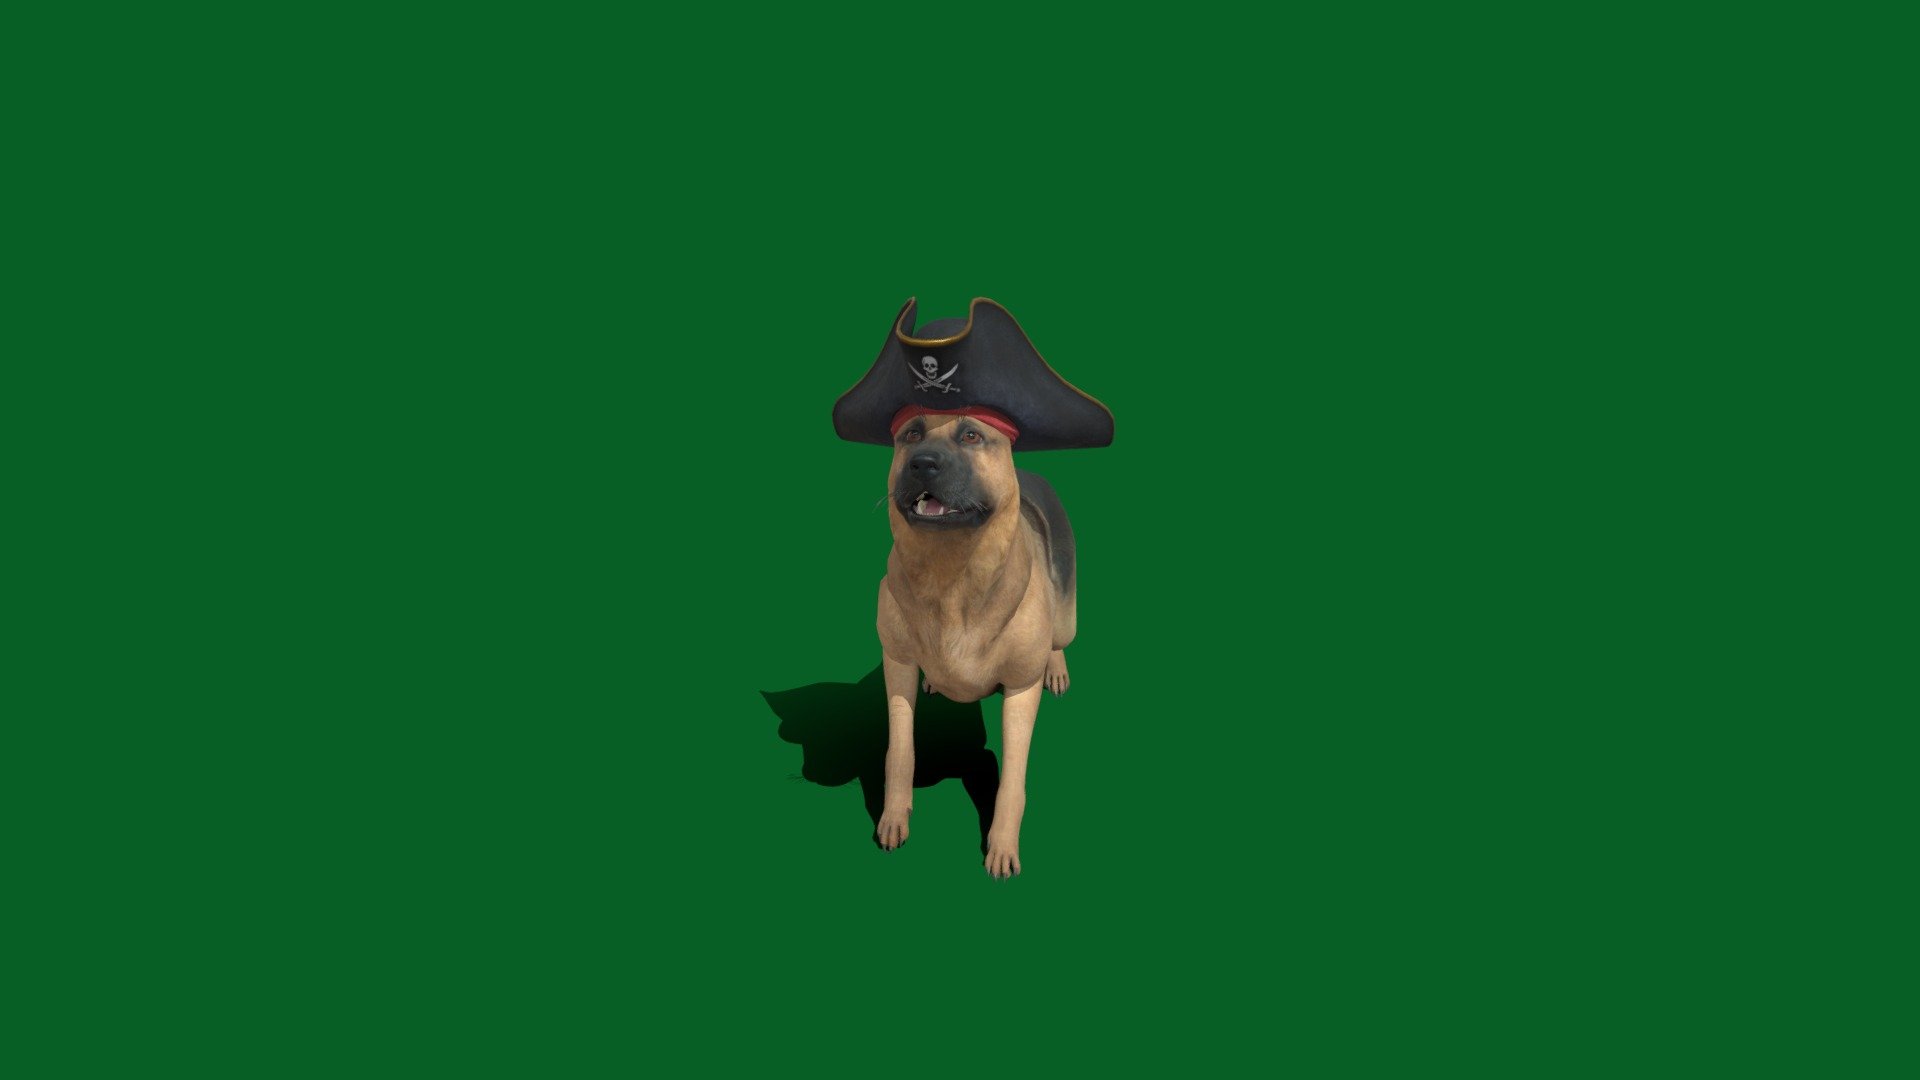 Non-commercialgoogle holloween theme dog 🐶 shepherd 
The &ldquo;Halloween Theme